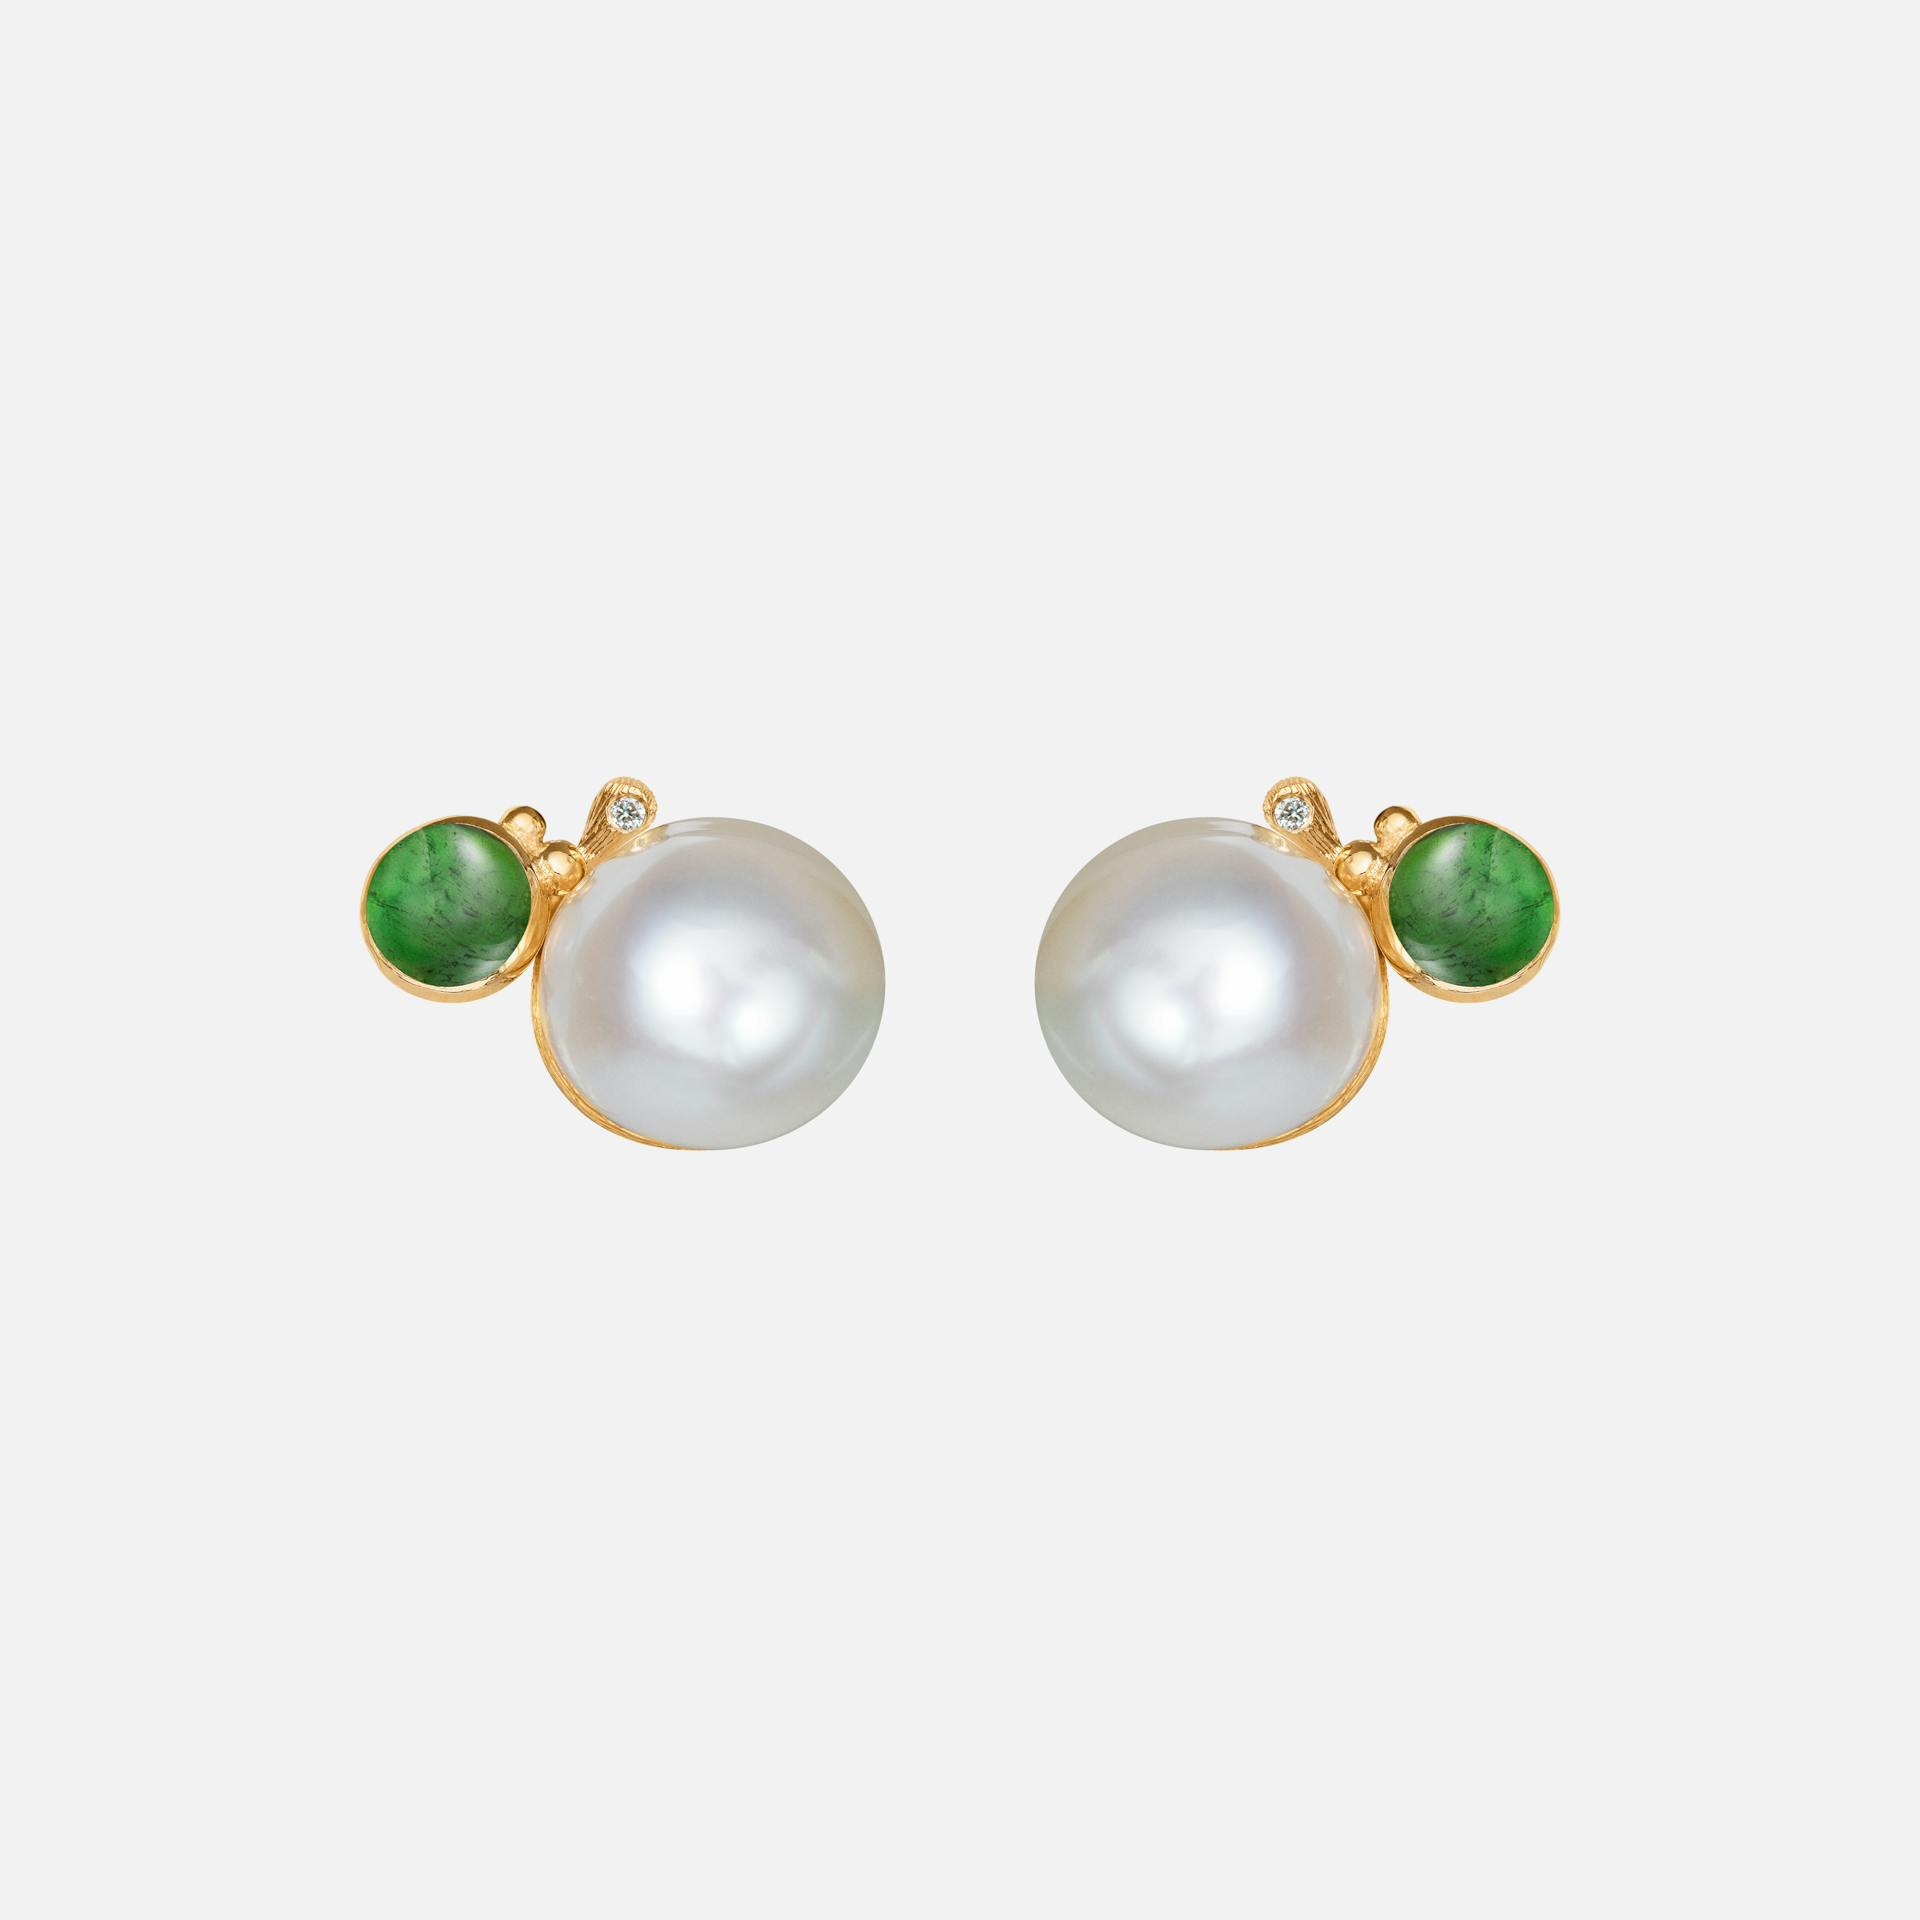 BoHo Pearl Stud Earrings in Gold with Green Tourmaline and Diamonds | Ole Lynggaard Copenhagen